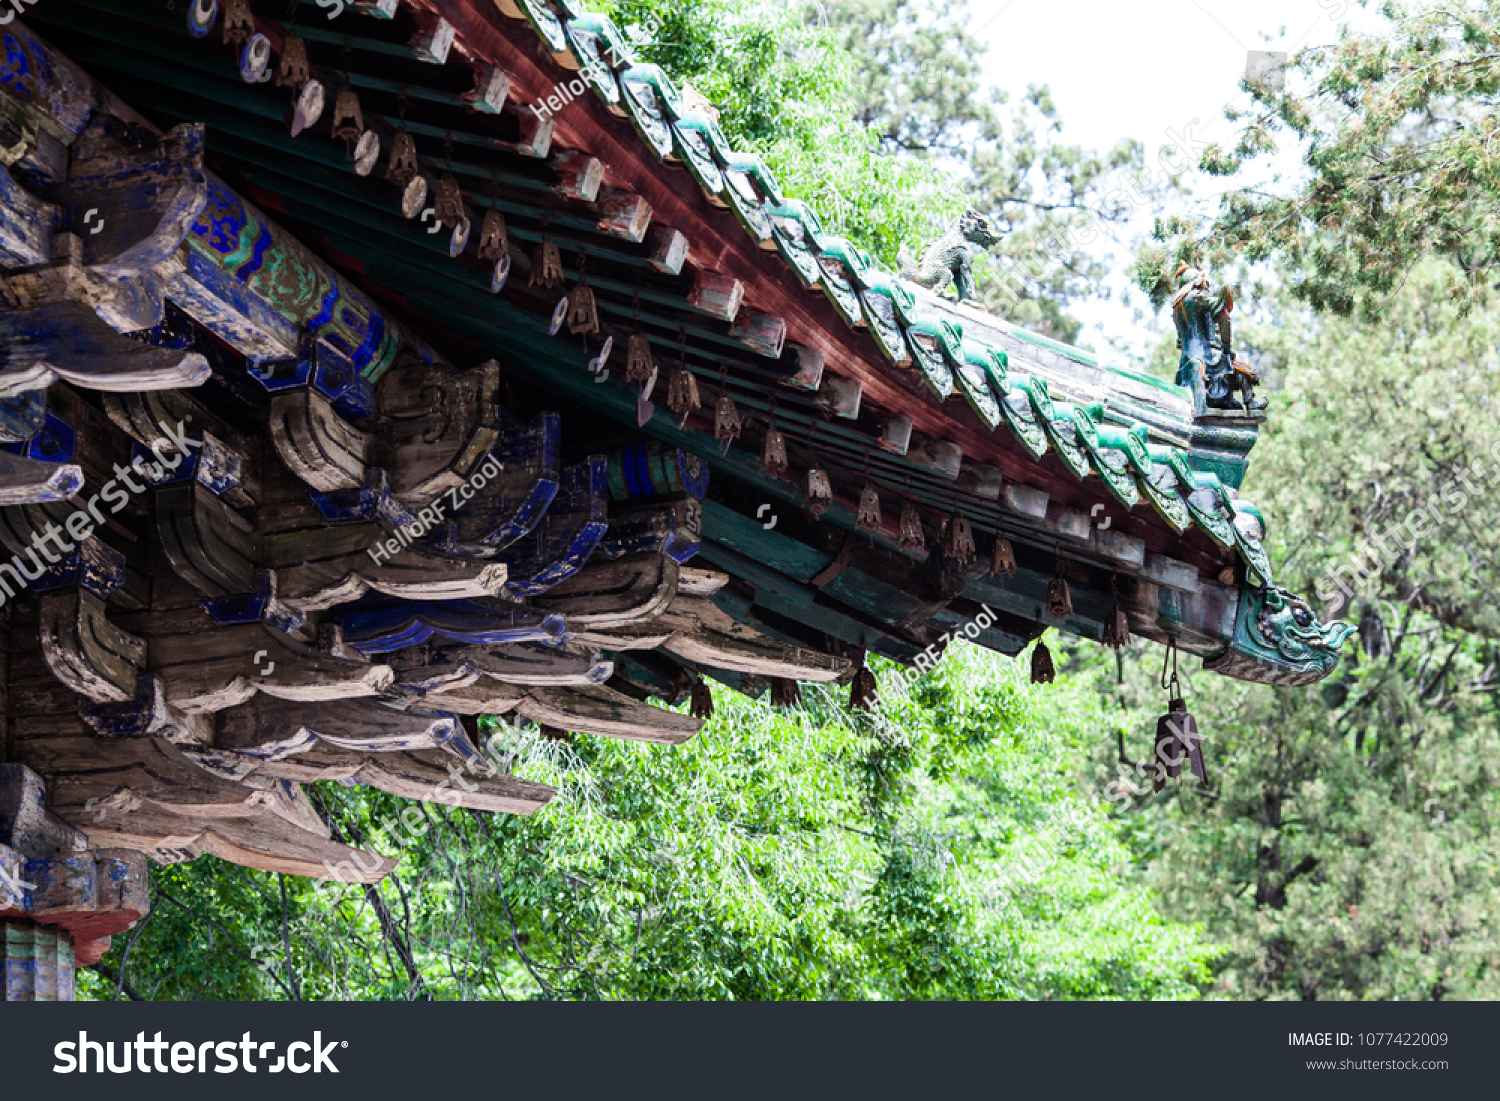 The brackets of the main hall of Lingyan Temple in Taishan, Jinan, Shandong, China #1077422009